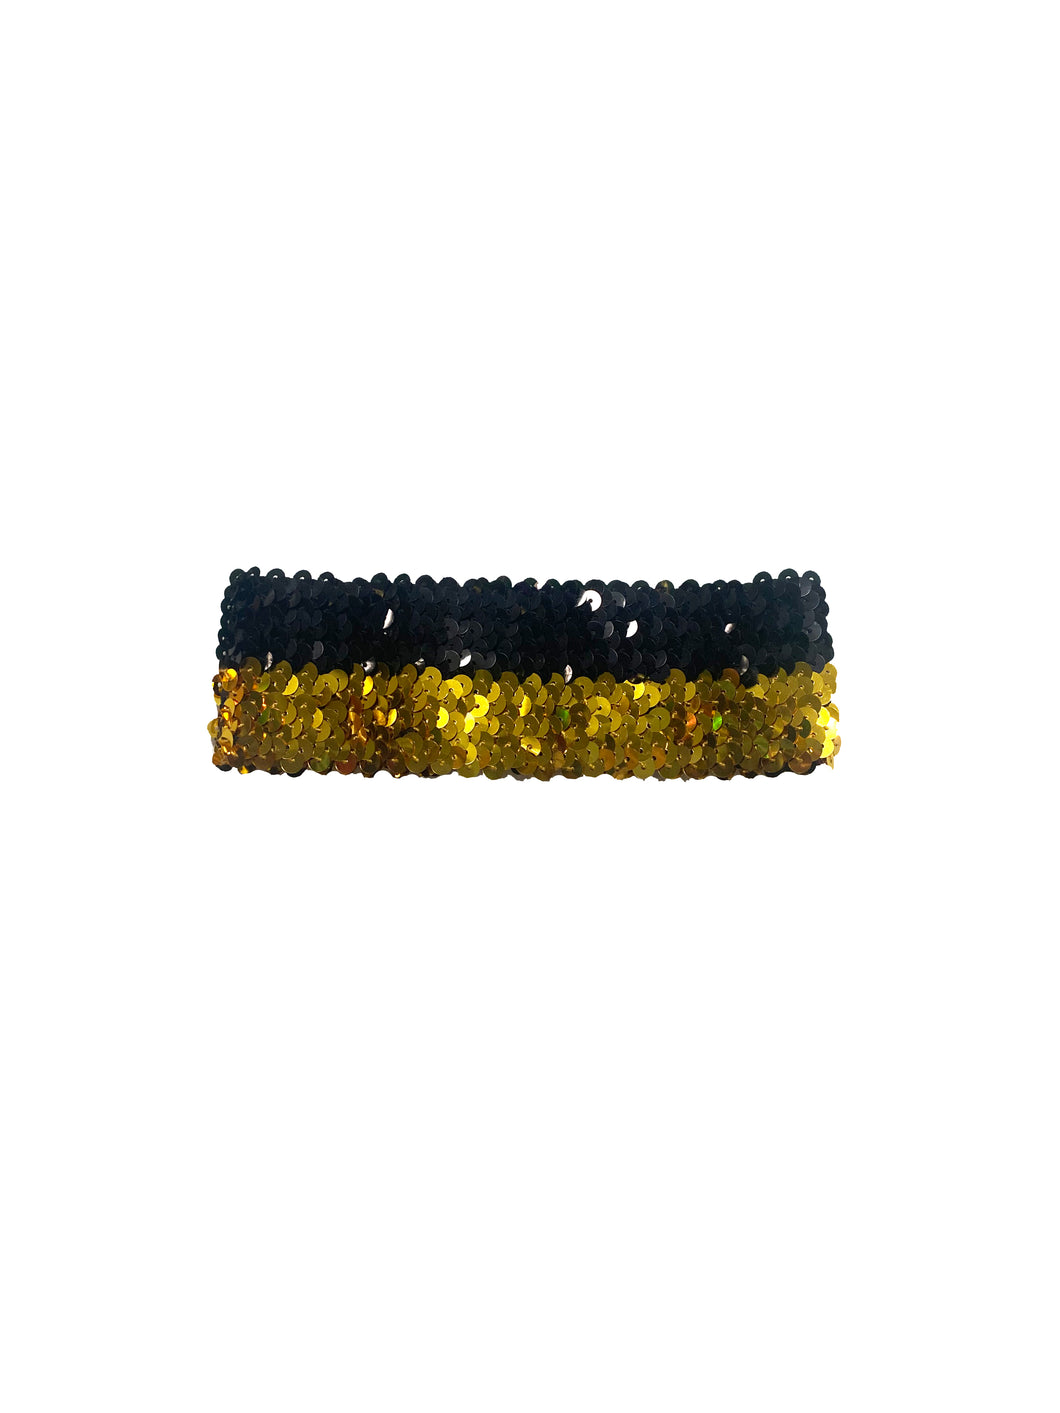 Sequin Headband - Black and Gold